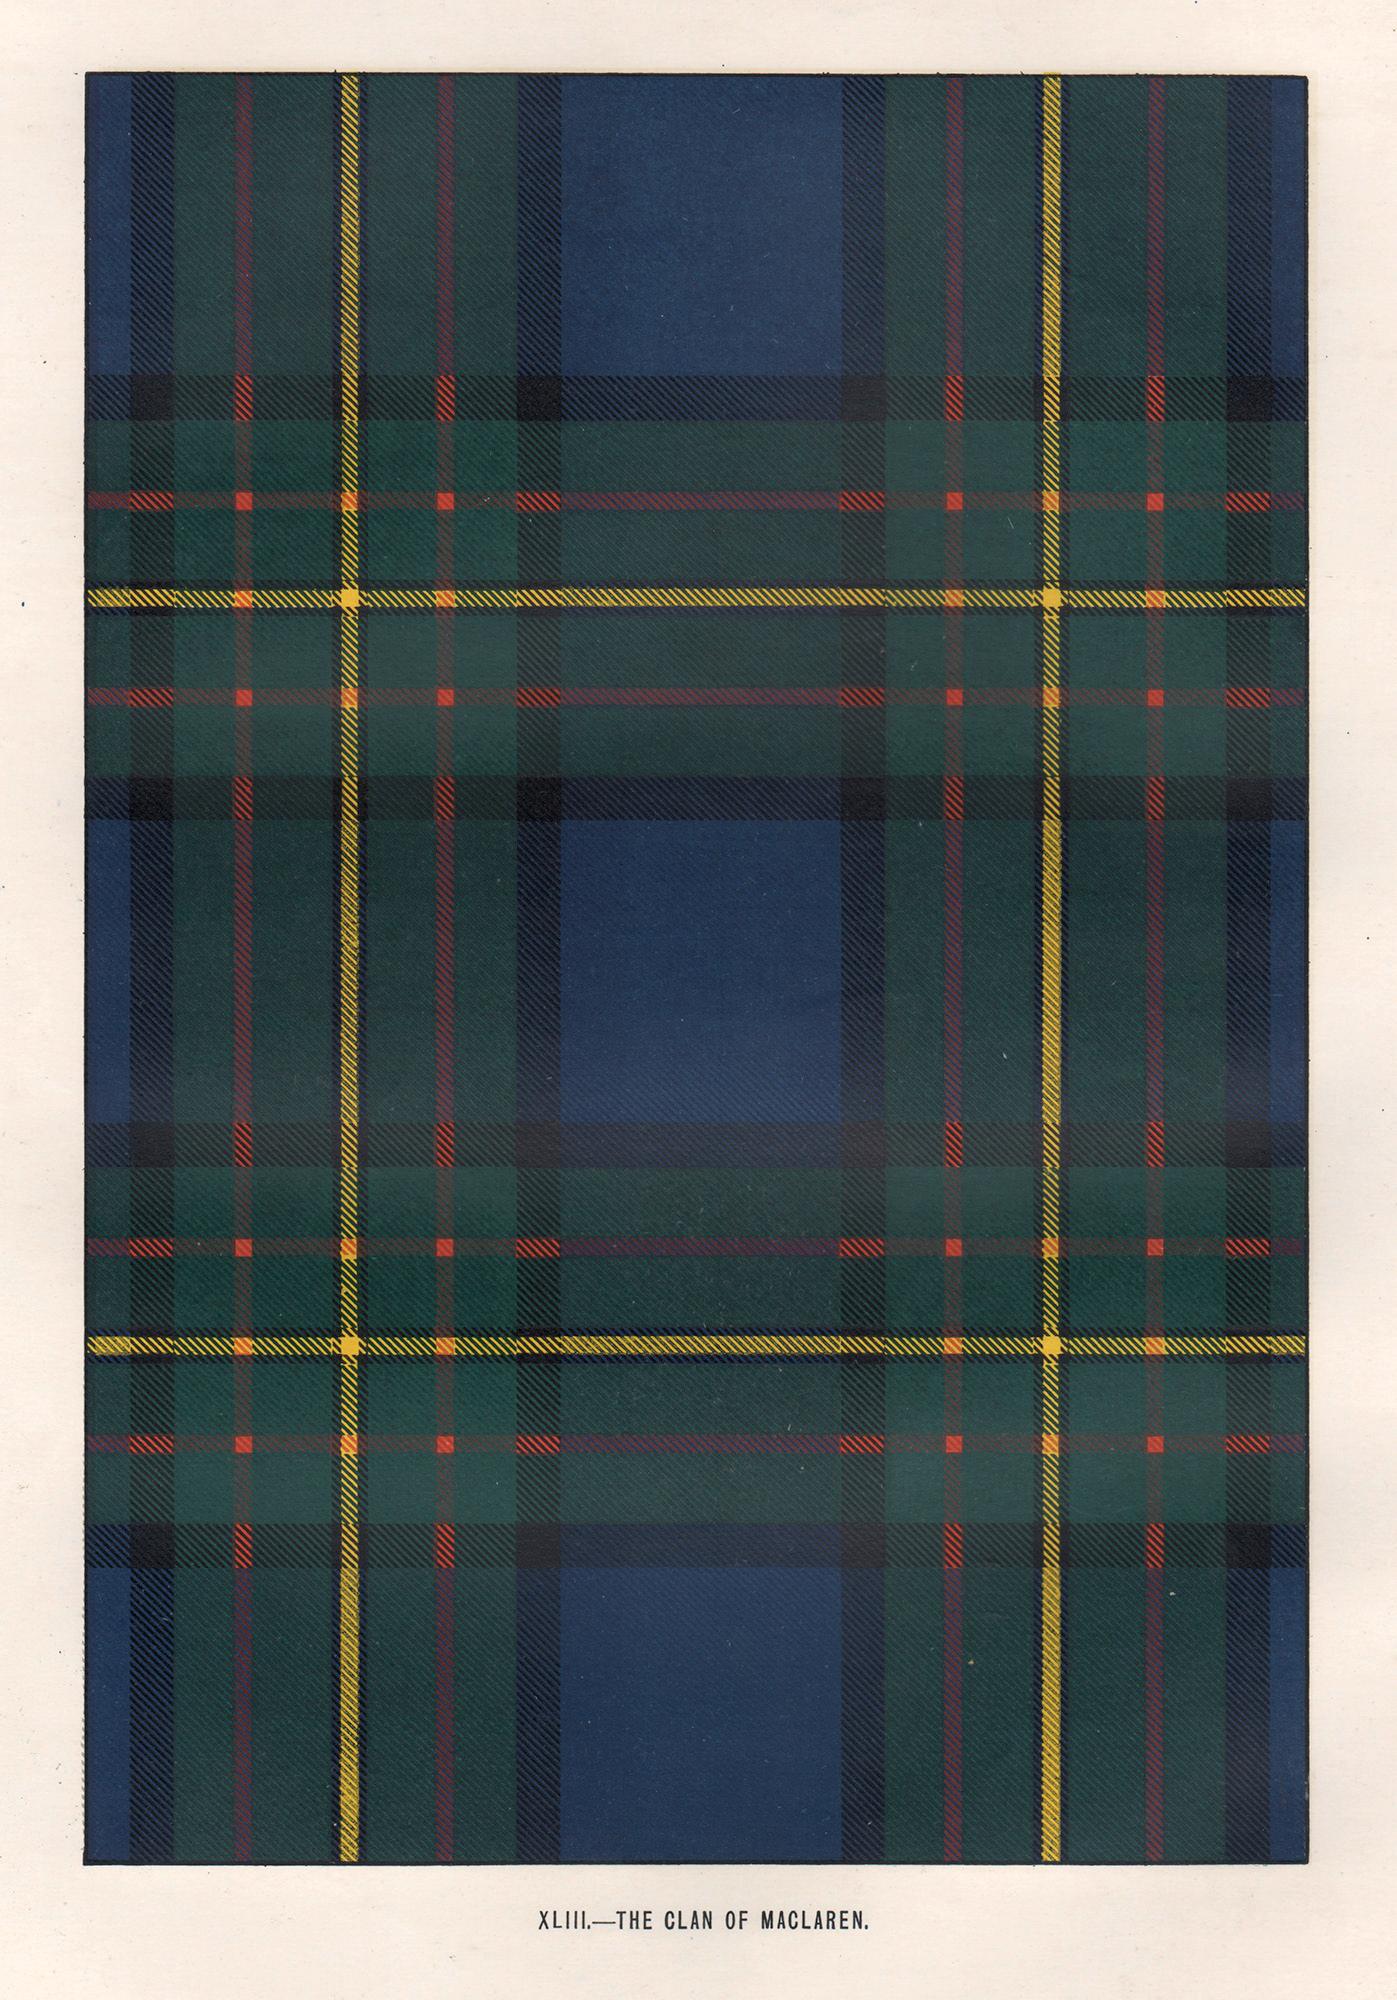 The Clan of MacLaren, Tartan, Scottish Scotland art design lithograph print